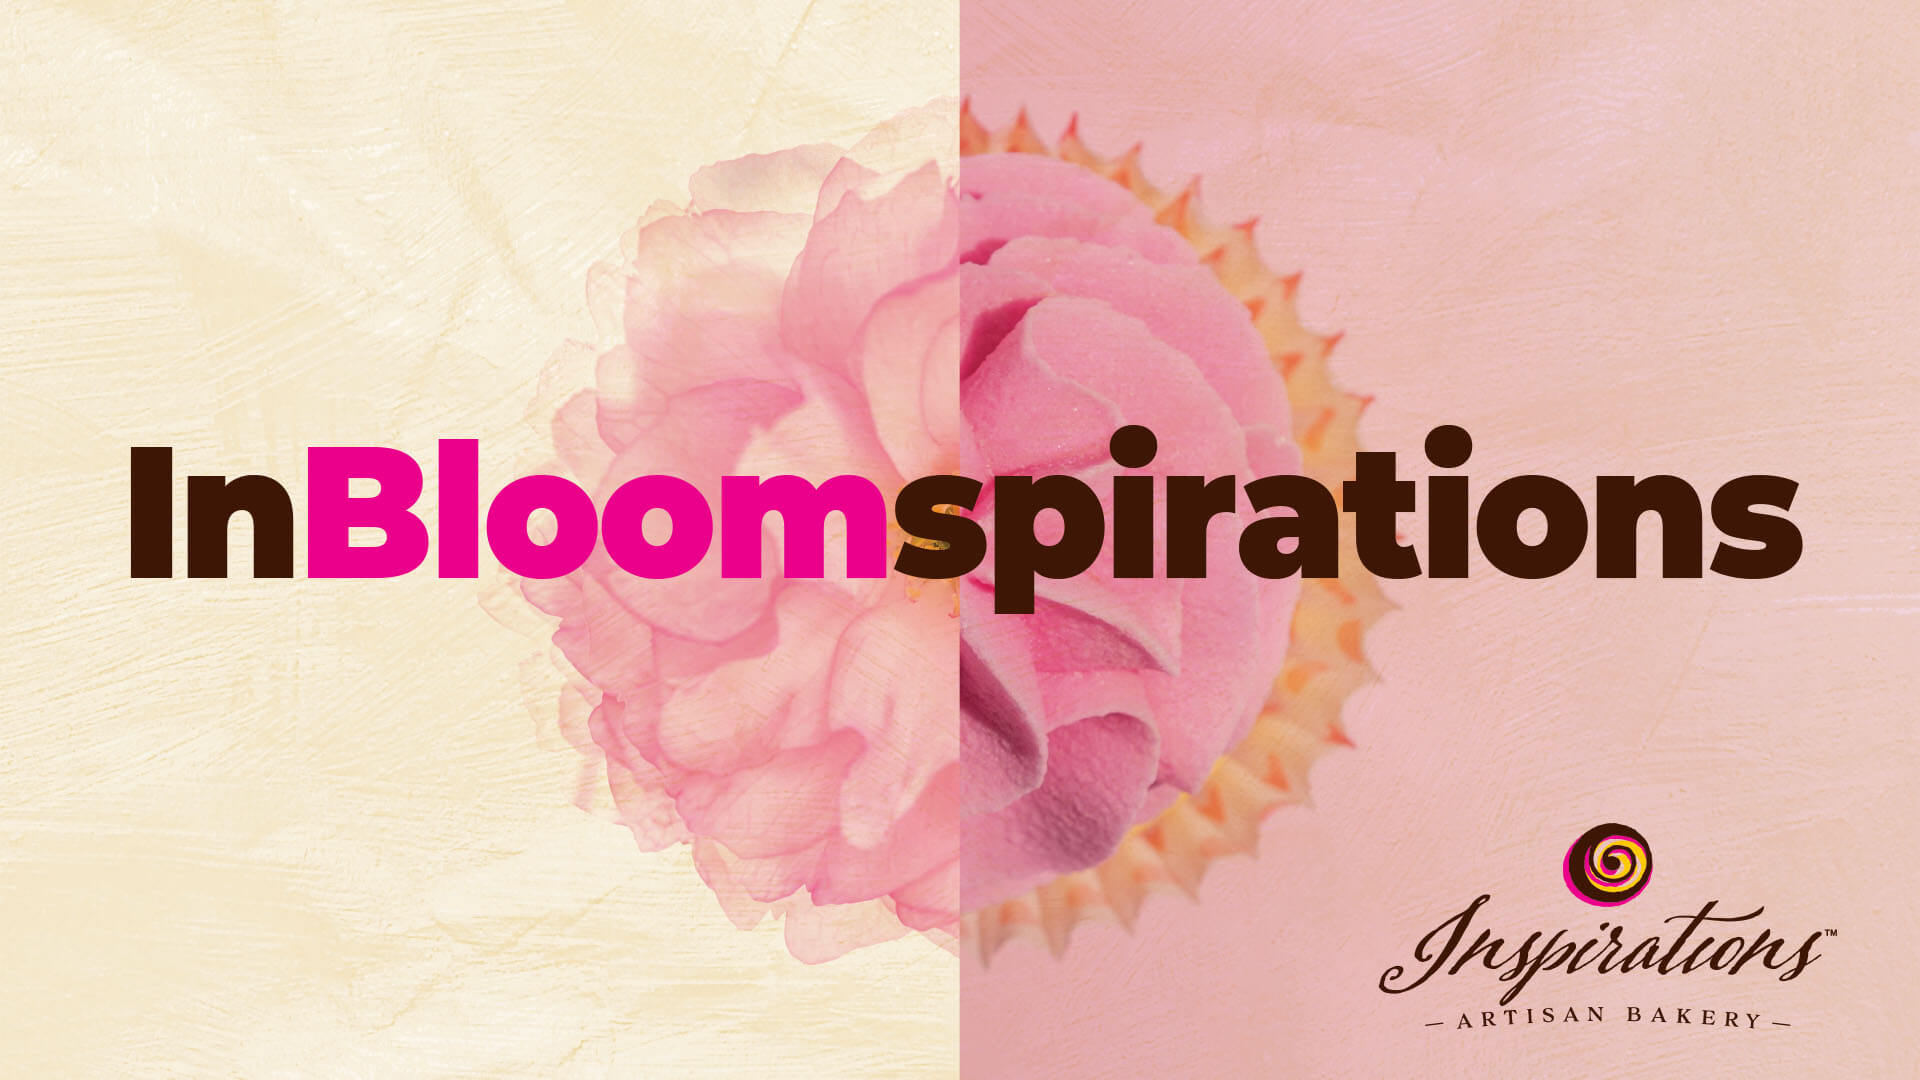 Inspirations Artisan Bakery InBloomspirations Cherry Blossom & Cupcake